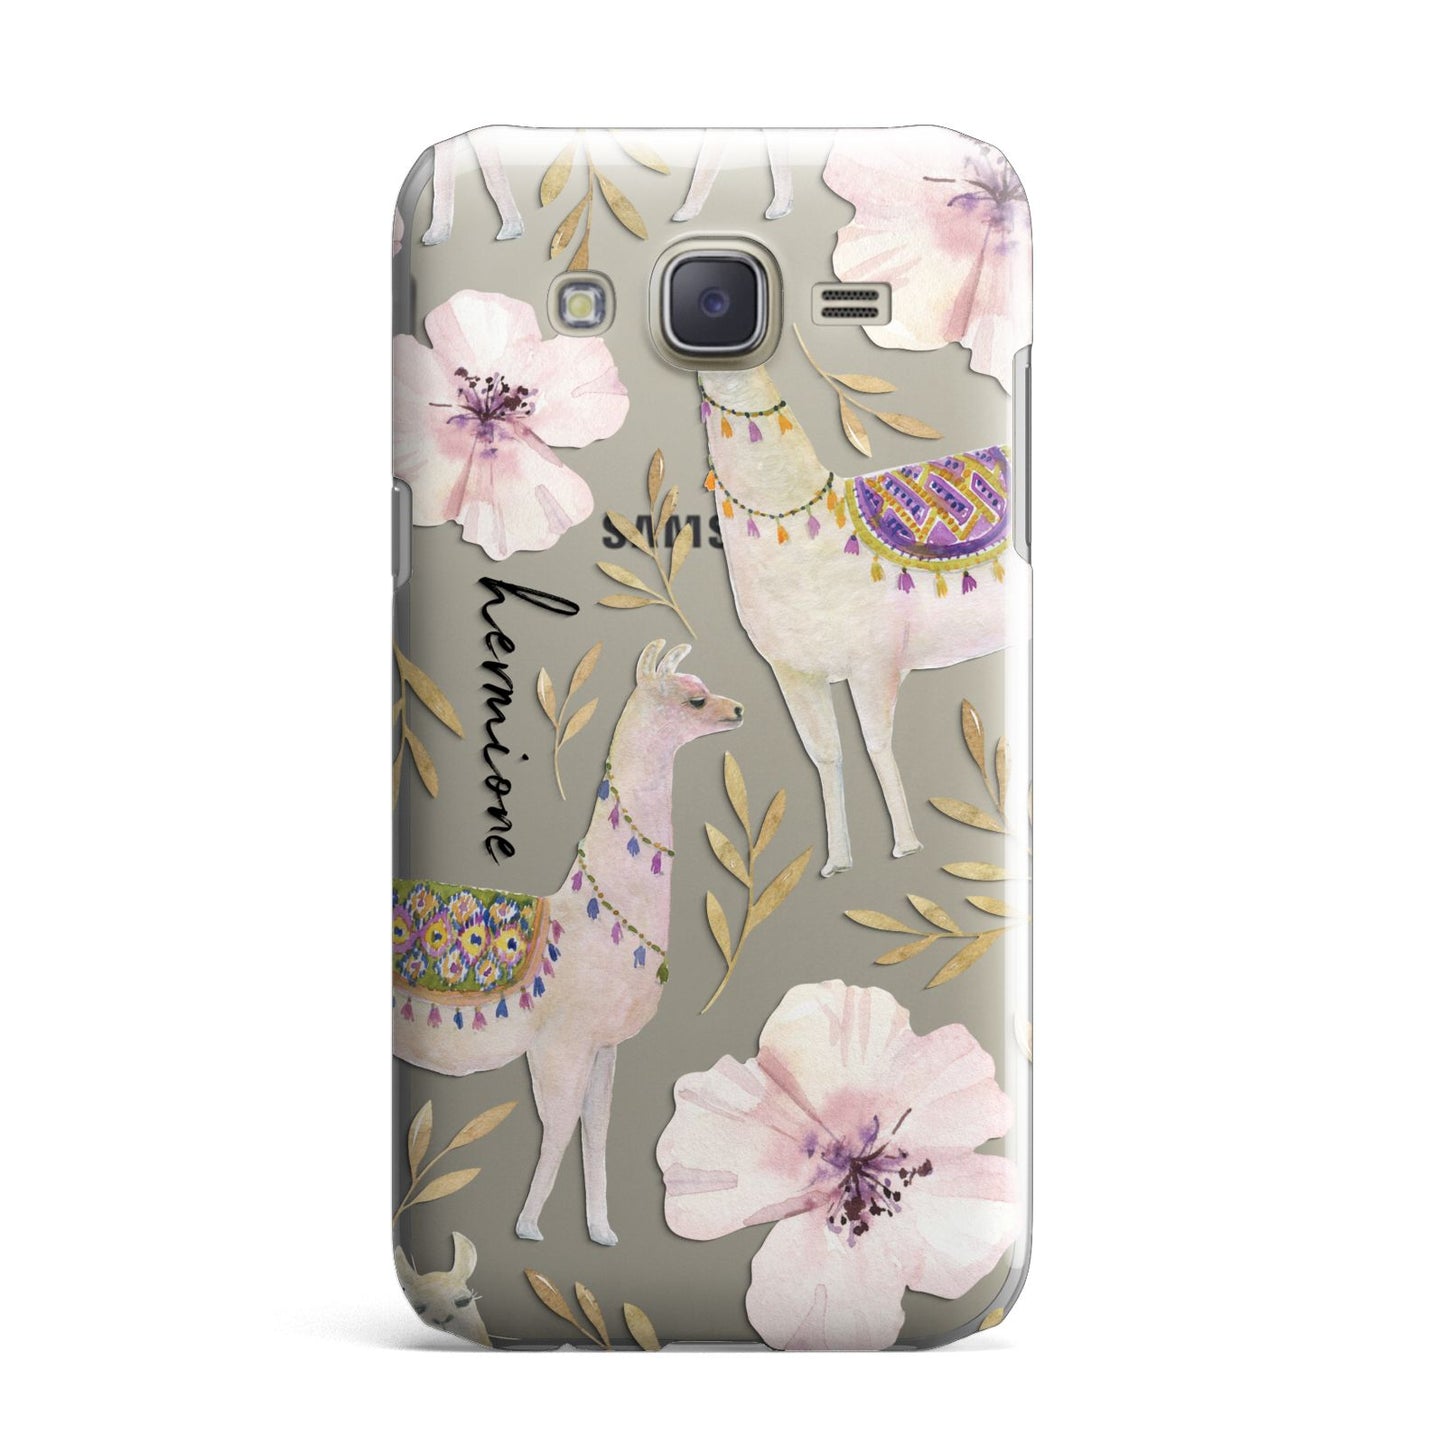 Personalised Llamas Samsung Galaxy J7 Case